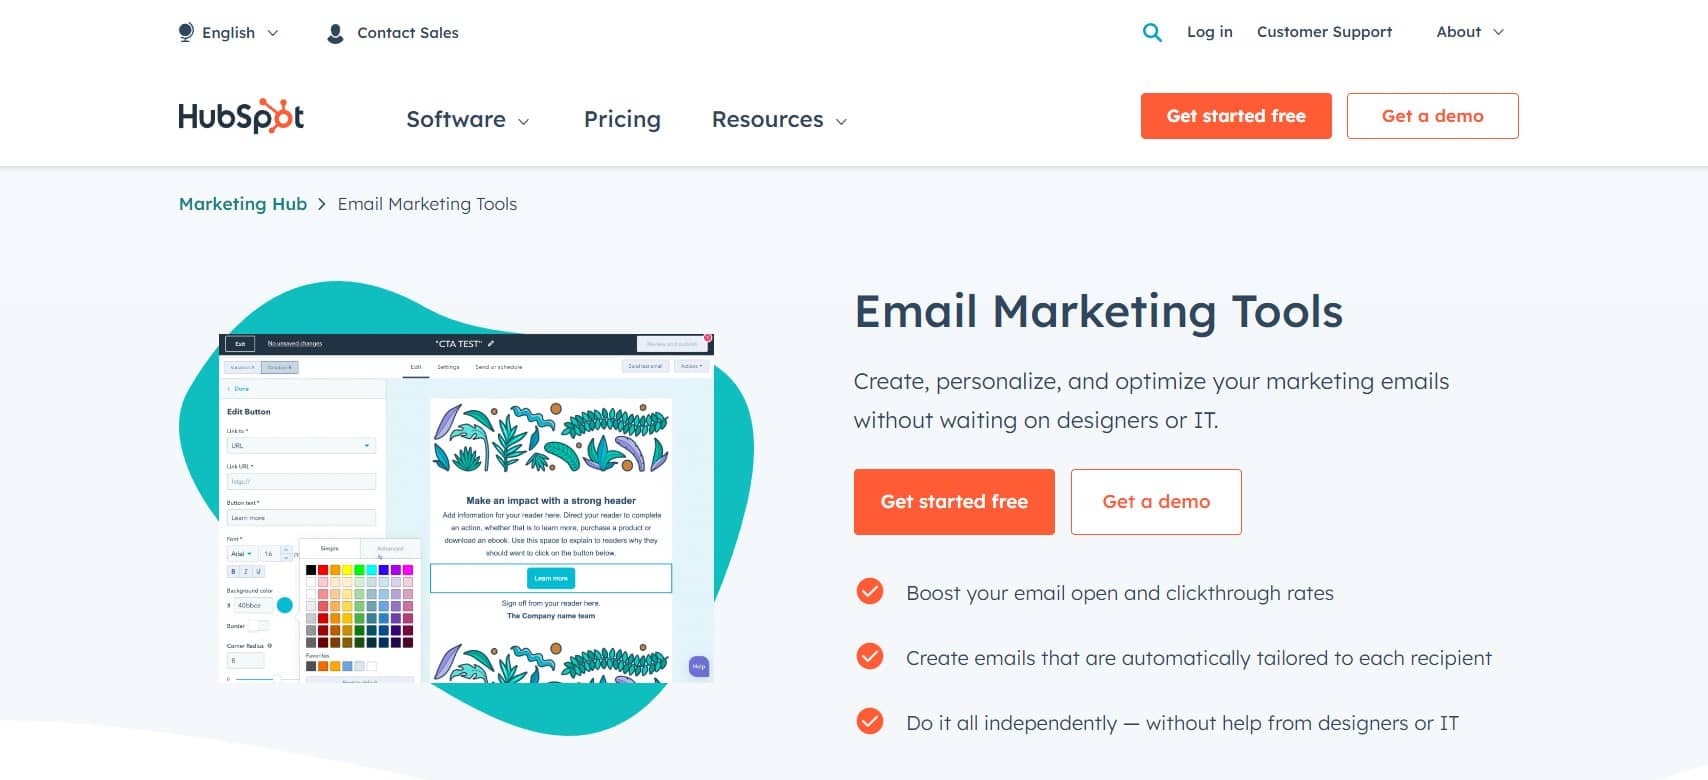 HubSpot Email Marketing Tools